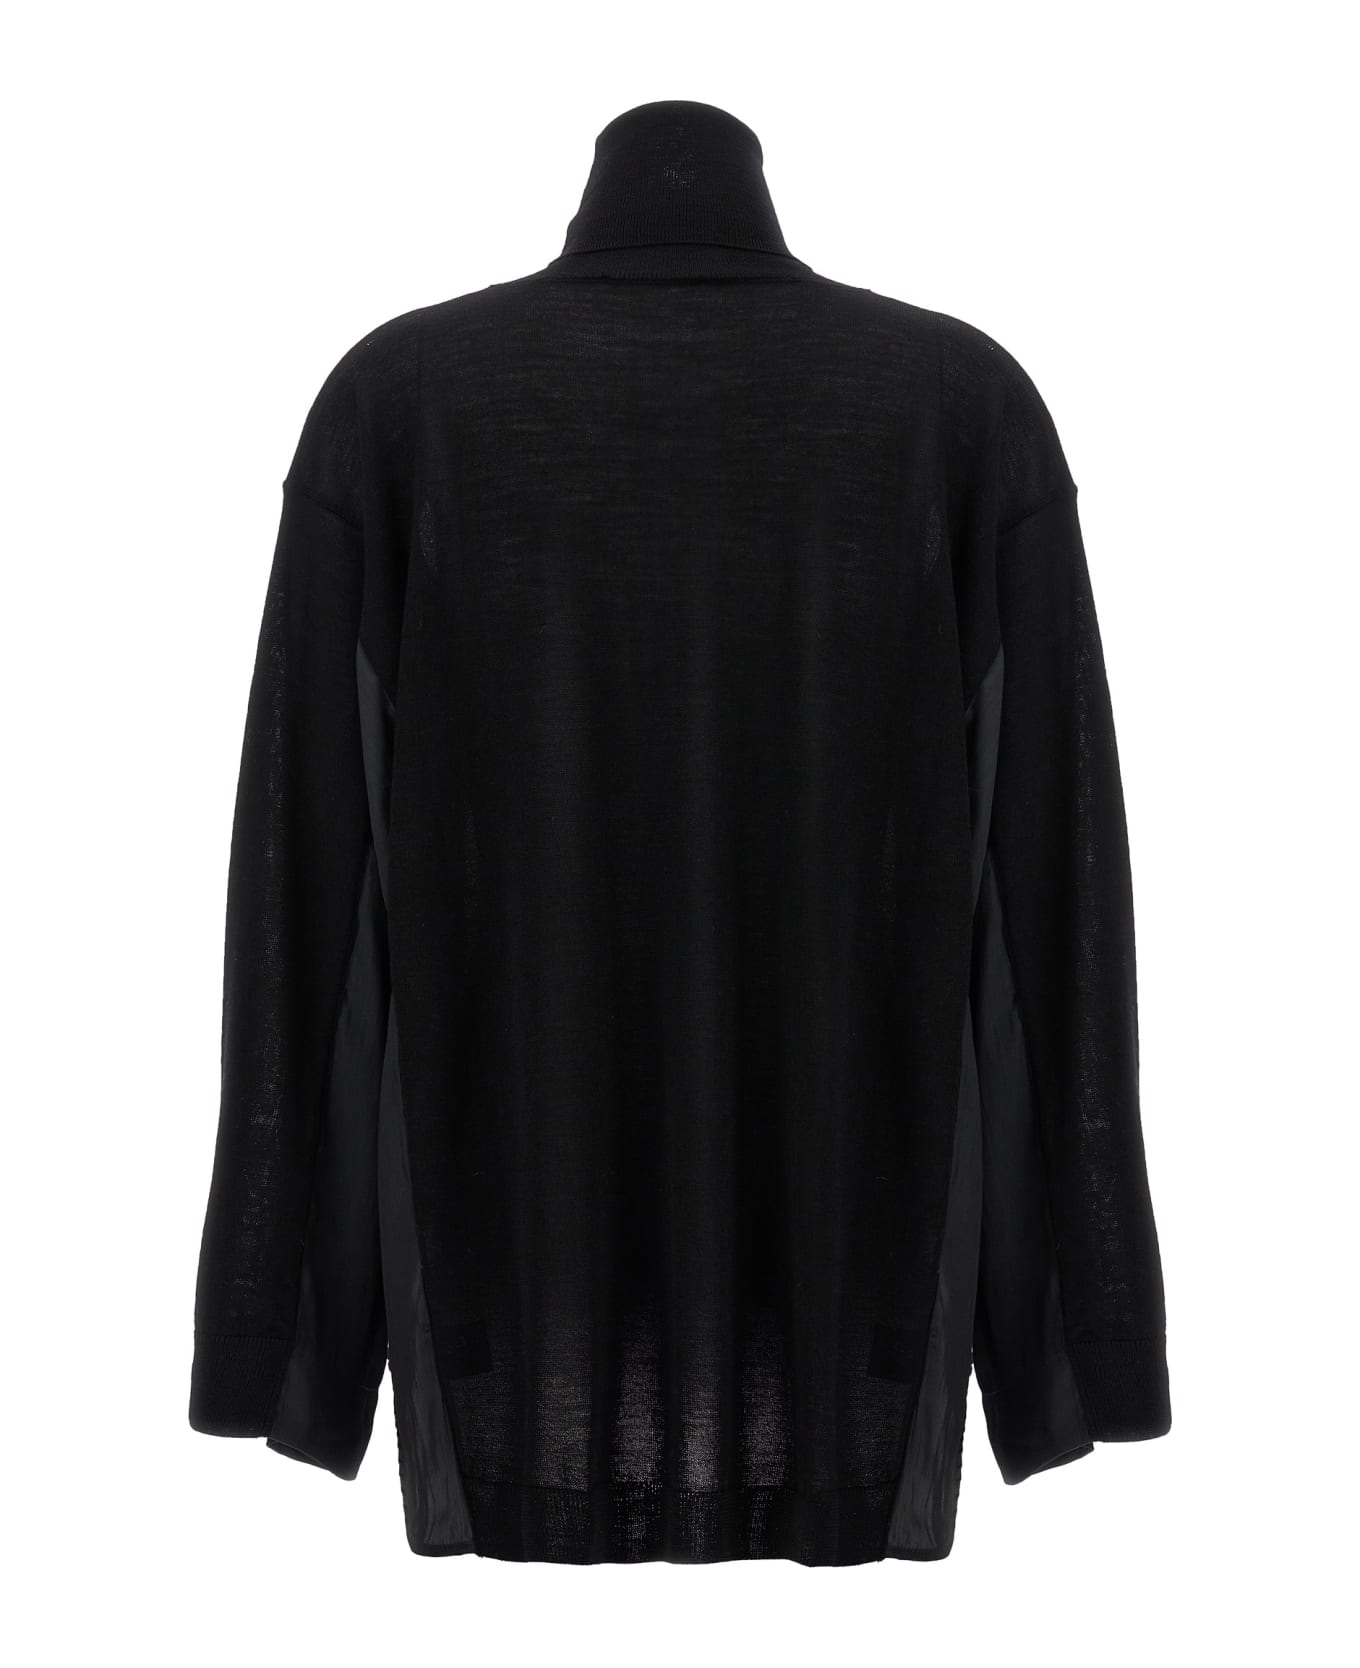 (nude) Satin Trim Sweater - BLACK